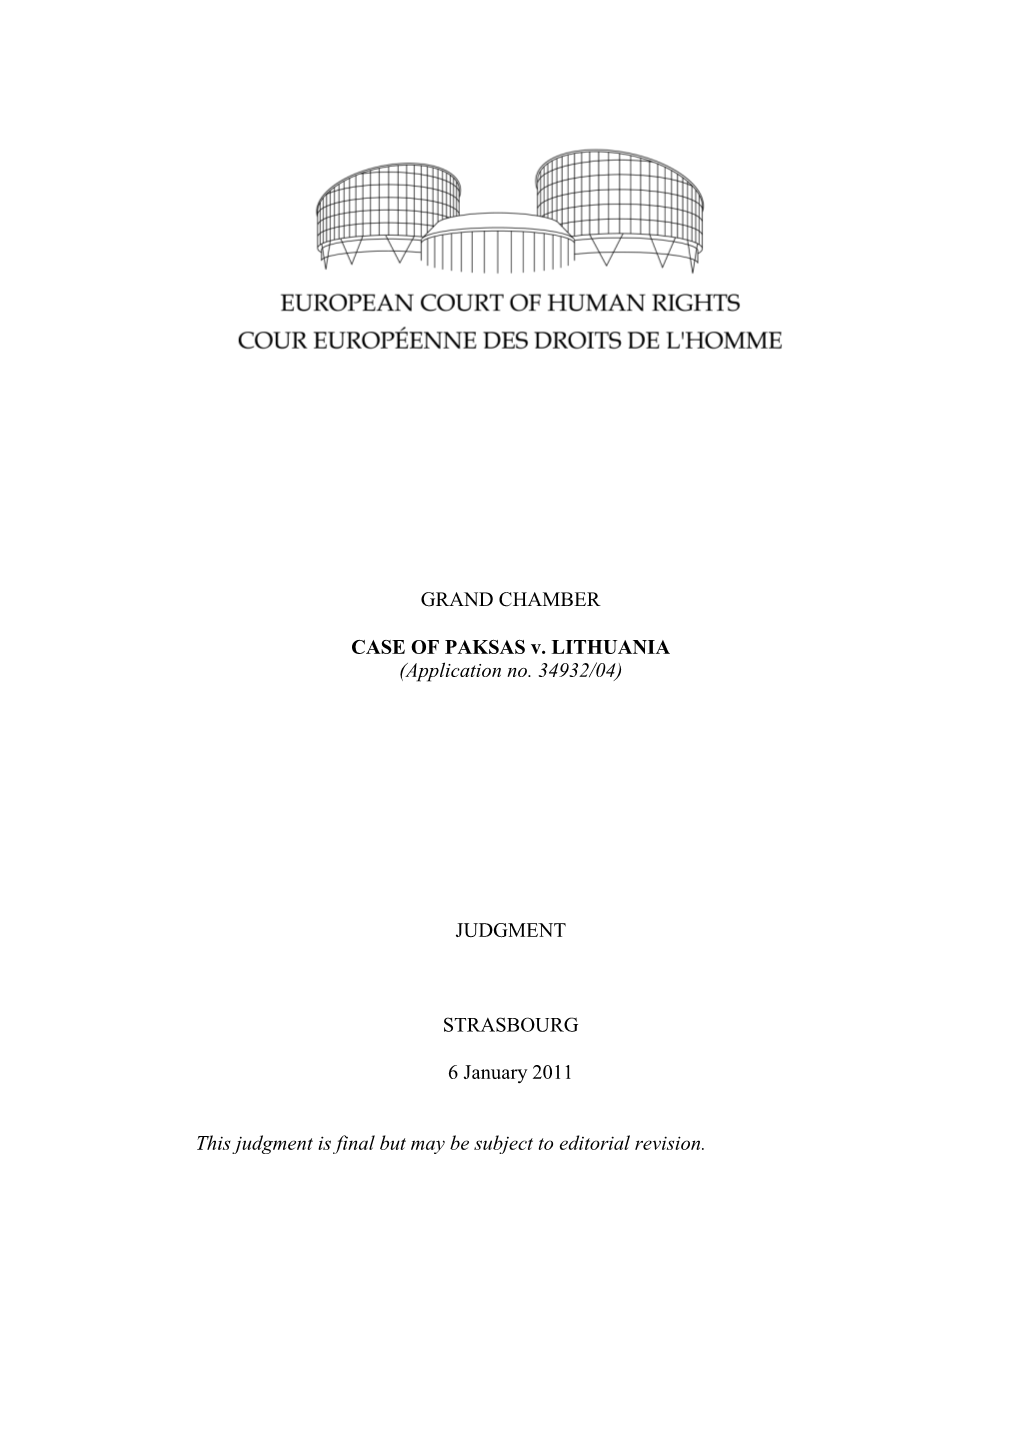 GRAND CHAMBER CASE of PAKSAS V. LITHUANIA